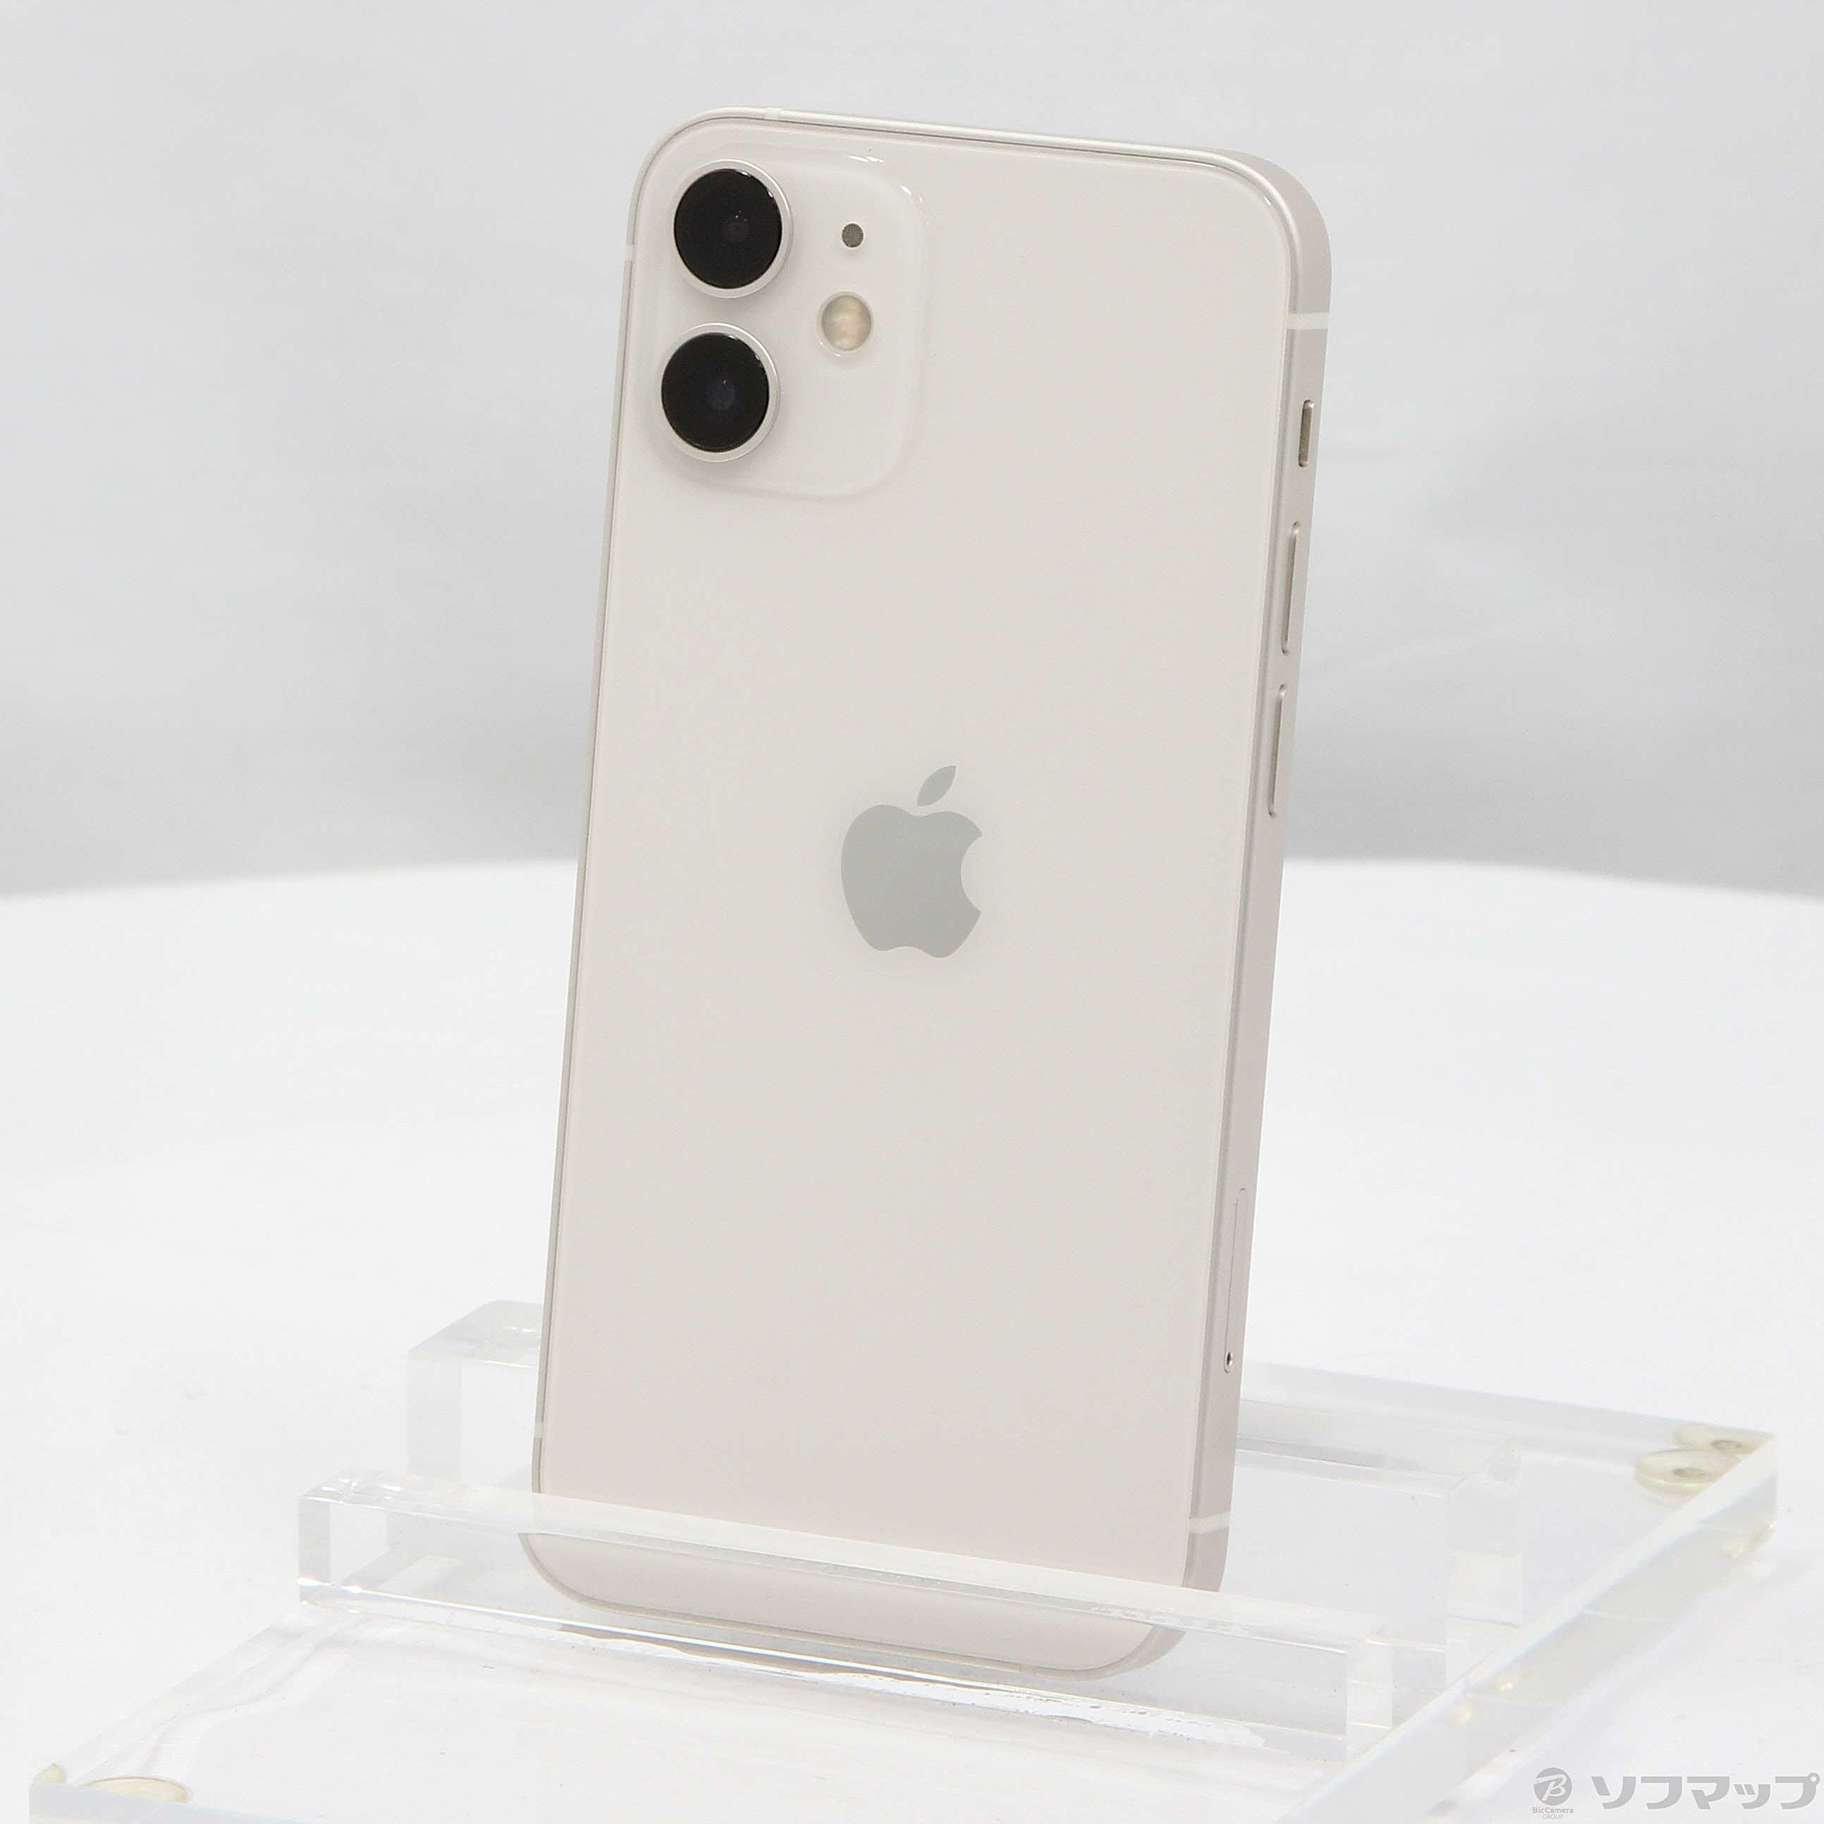 iPhone 12 mini 256GB SIMフリー [ホワイト] 中古(白ロム)価格比較 ...